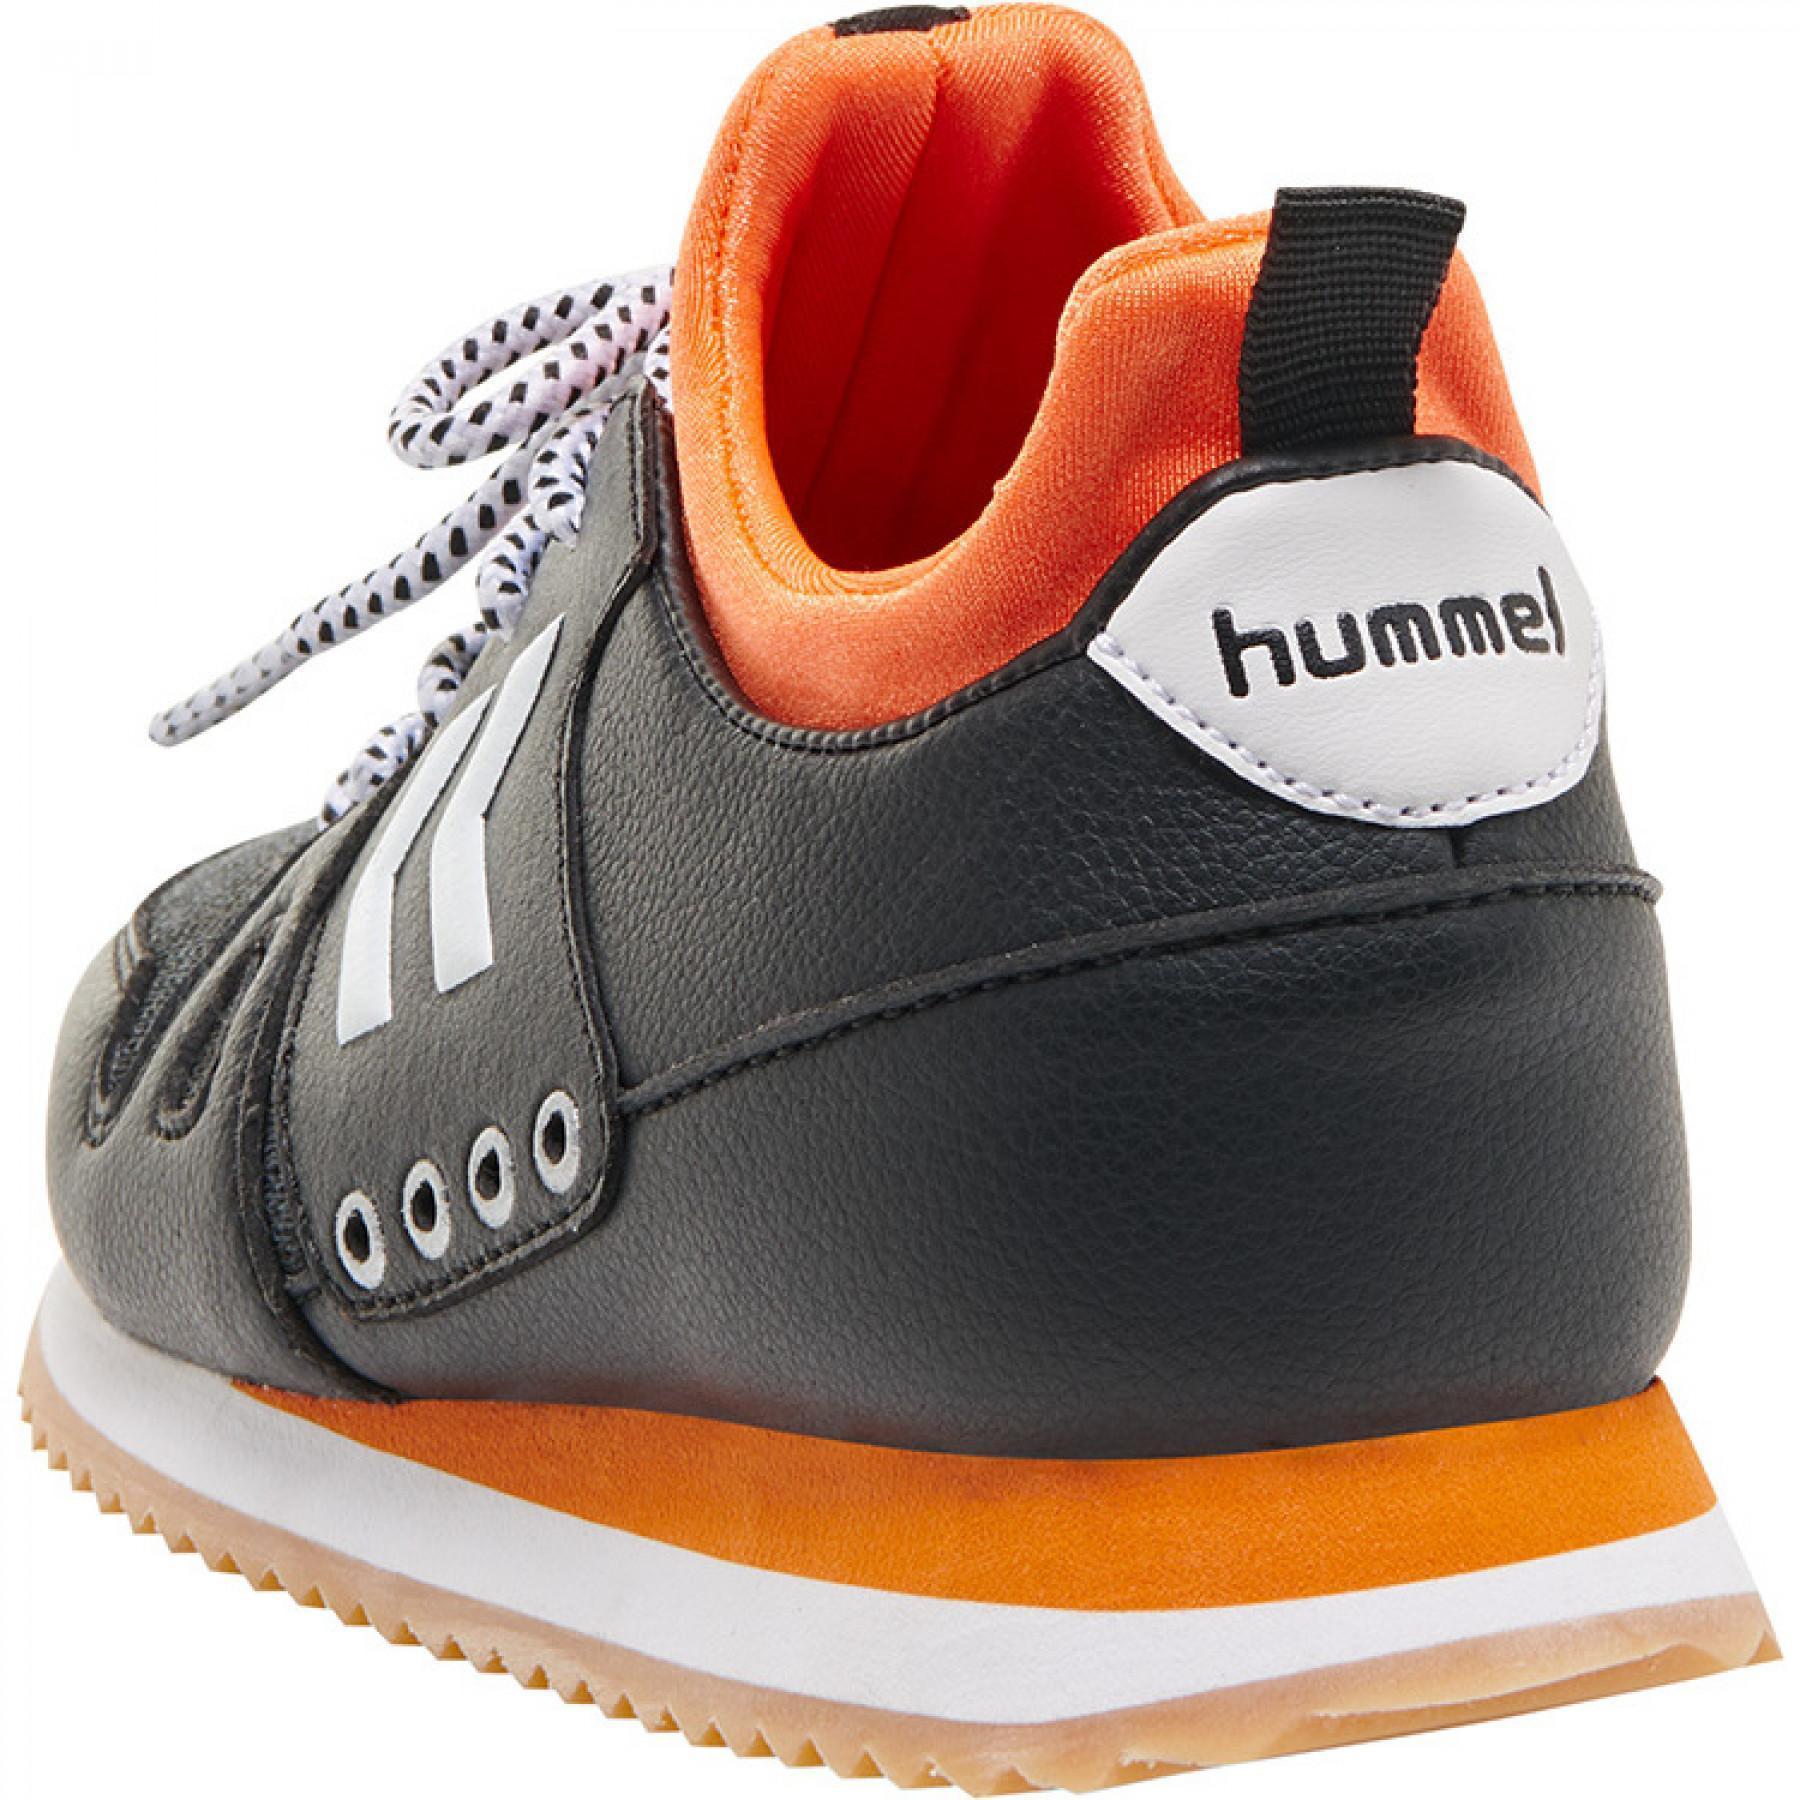 Children's sneakers Hummel marathona bts boy